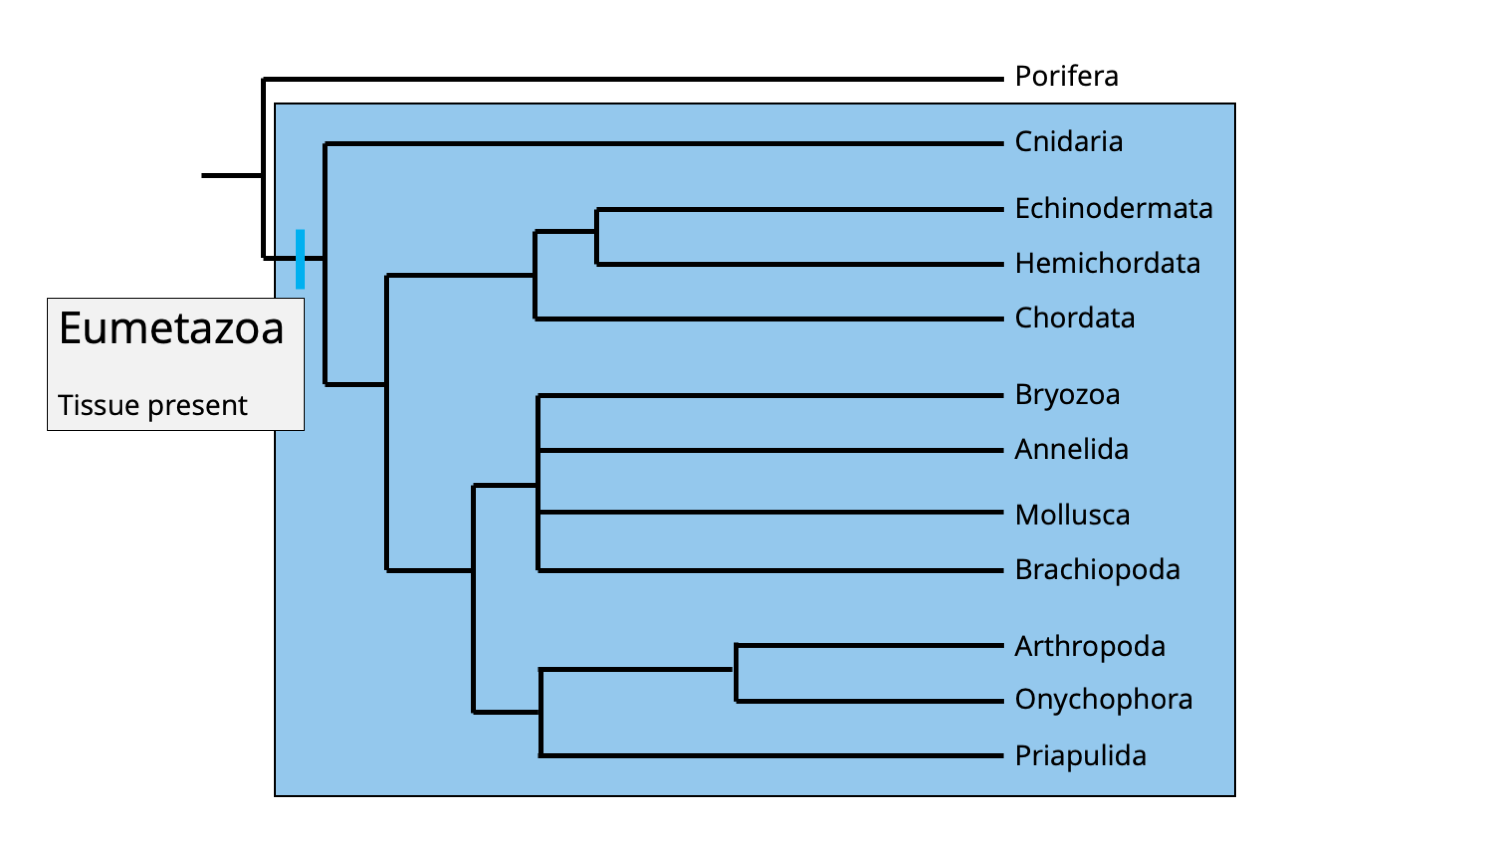 Phylogenetic tree depicting membership of the Eumetazoa clade.